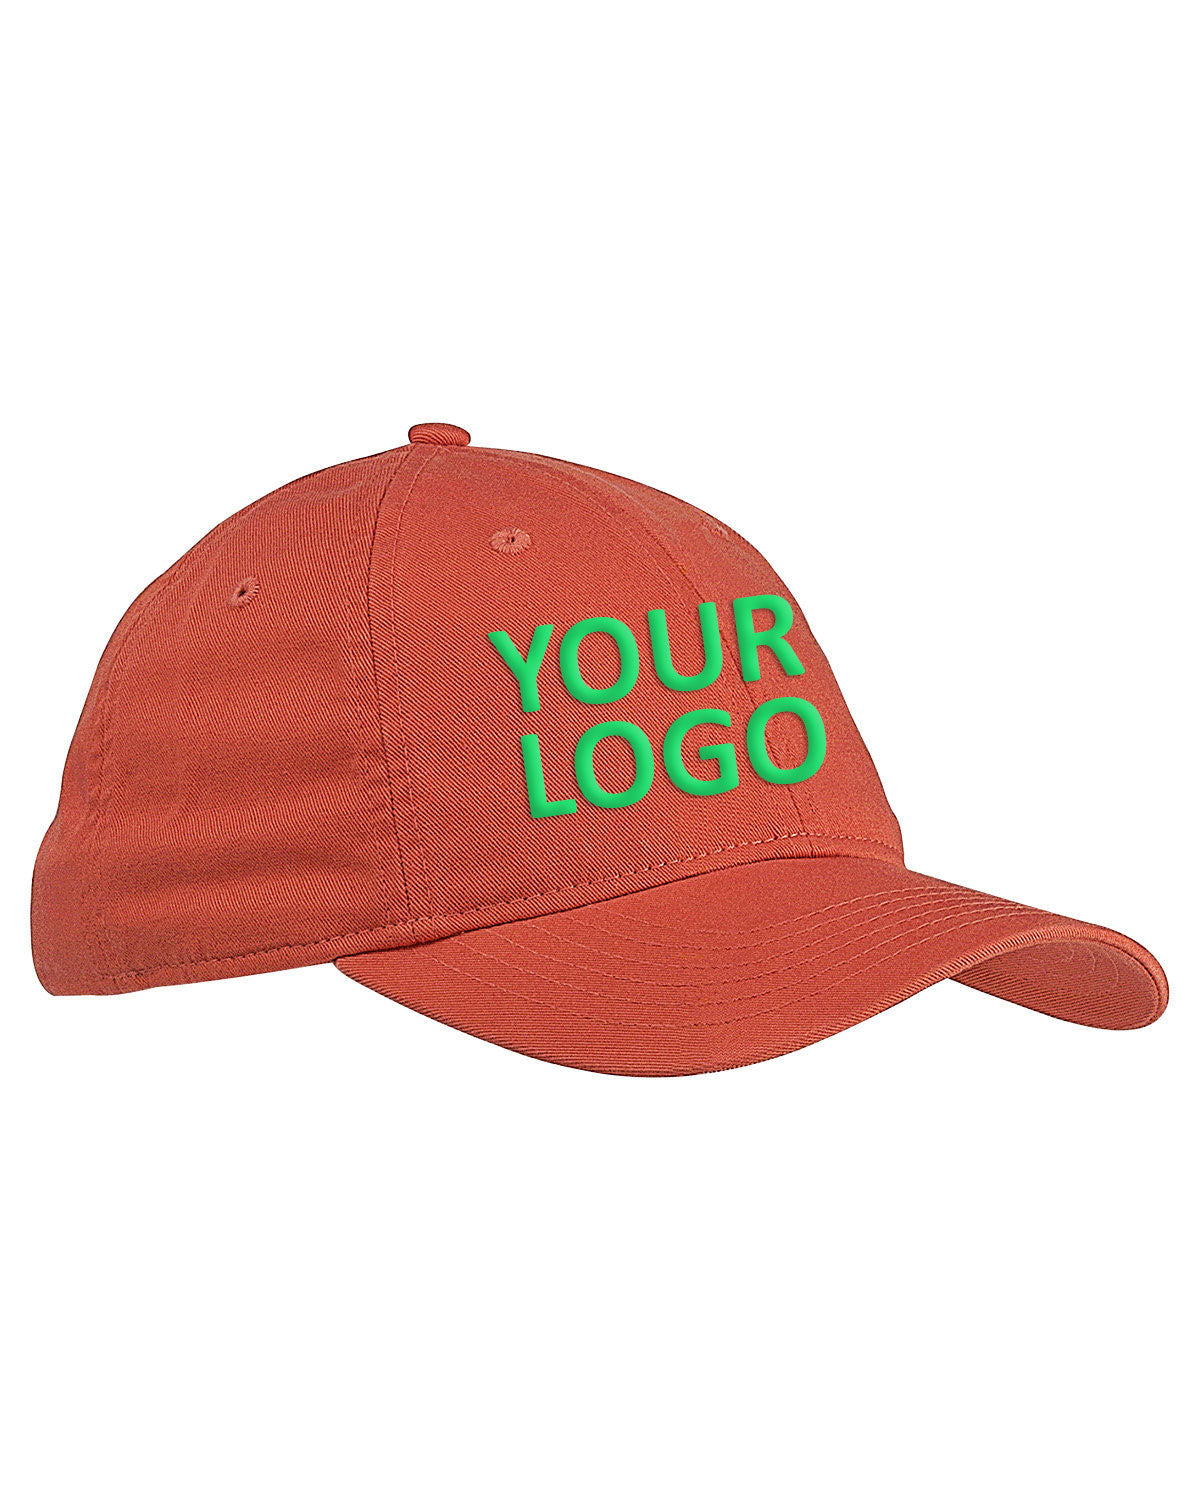 econscious_ec7000_orange poppy_company_logo_headwear